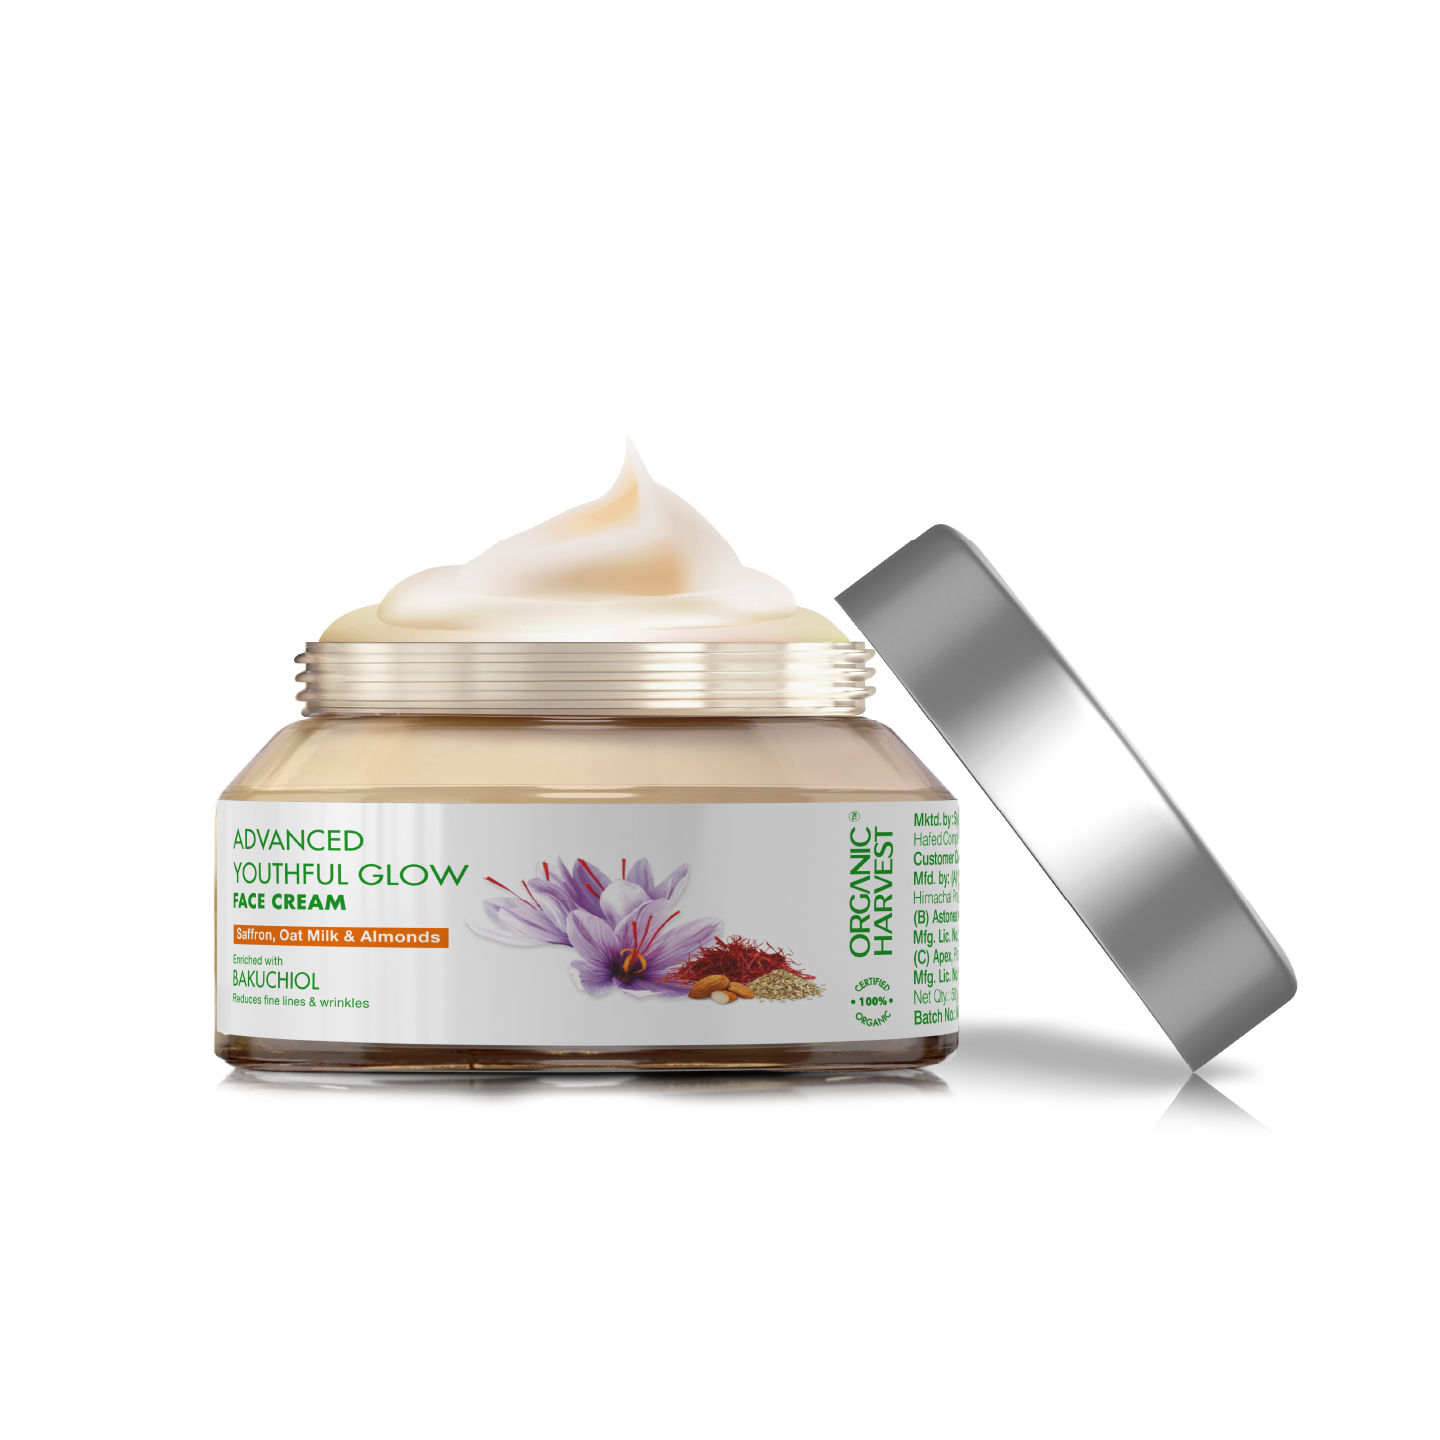 Organic Harvest Activ Advance Youthful Glow Face Cream- Saffron oat milk & almonds